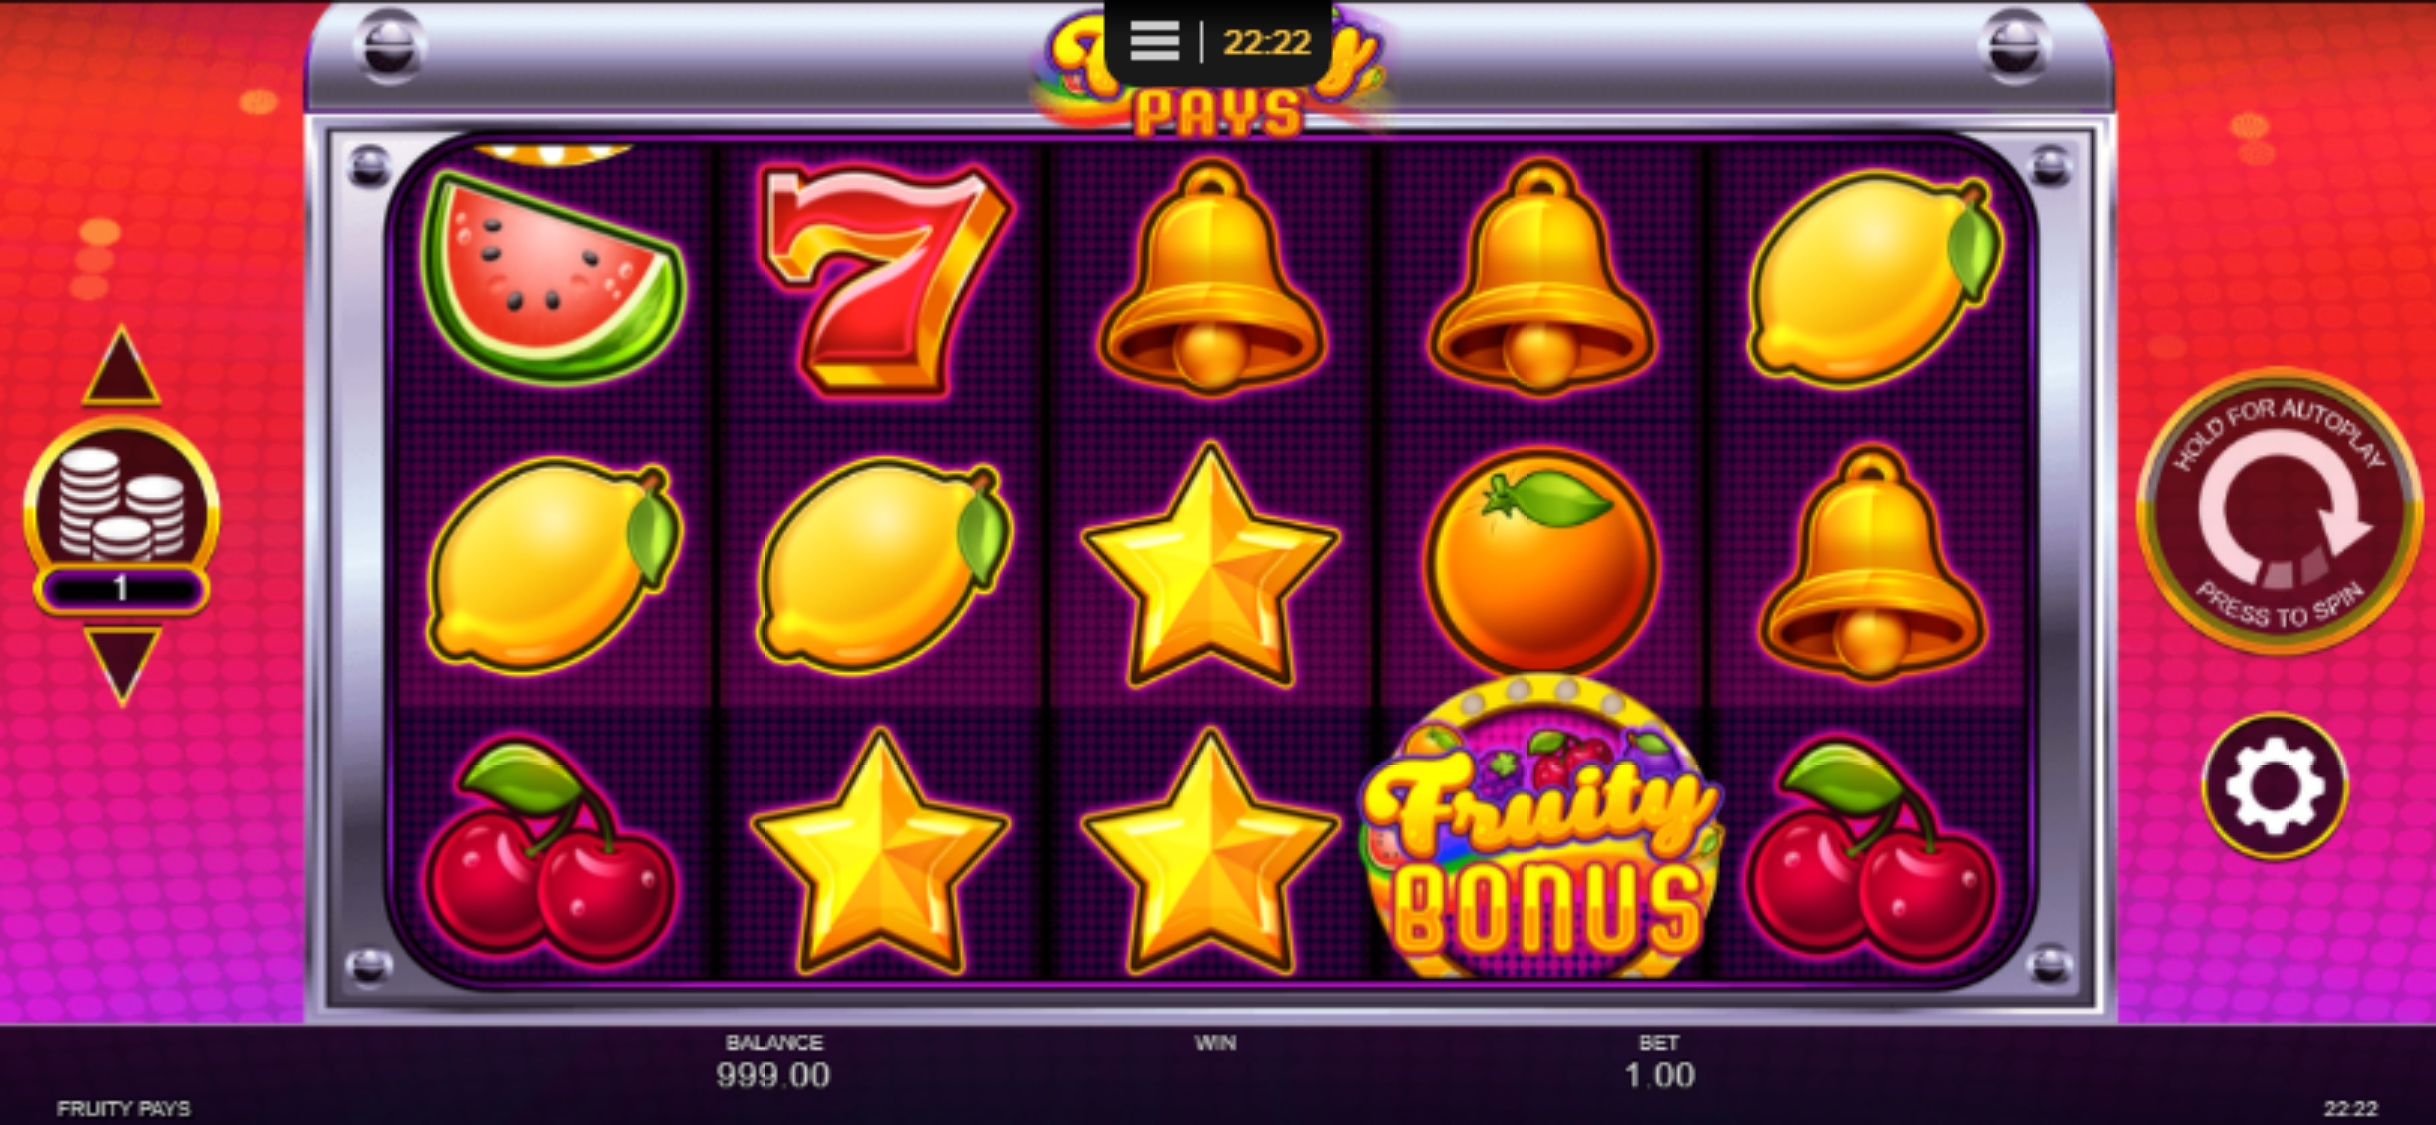 Fun Casino Mobile Slot Games Review